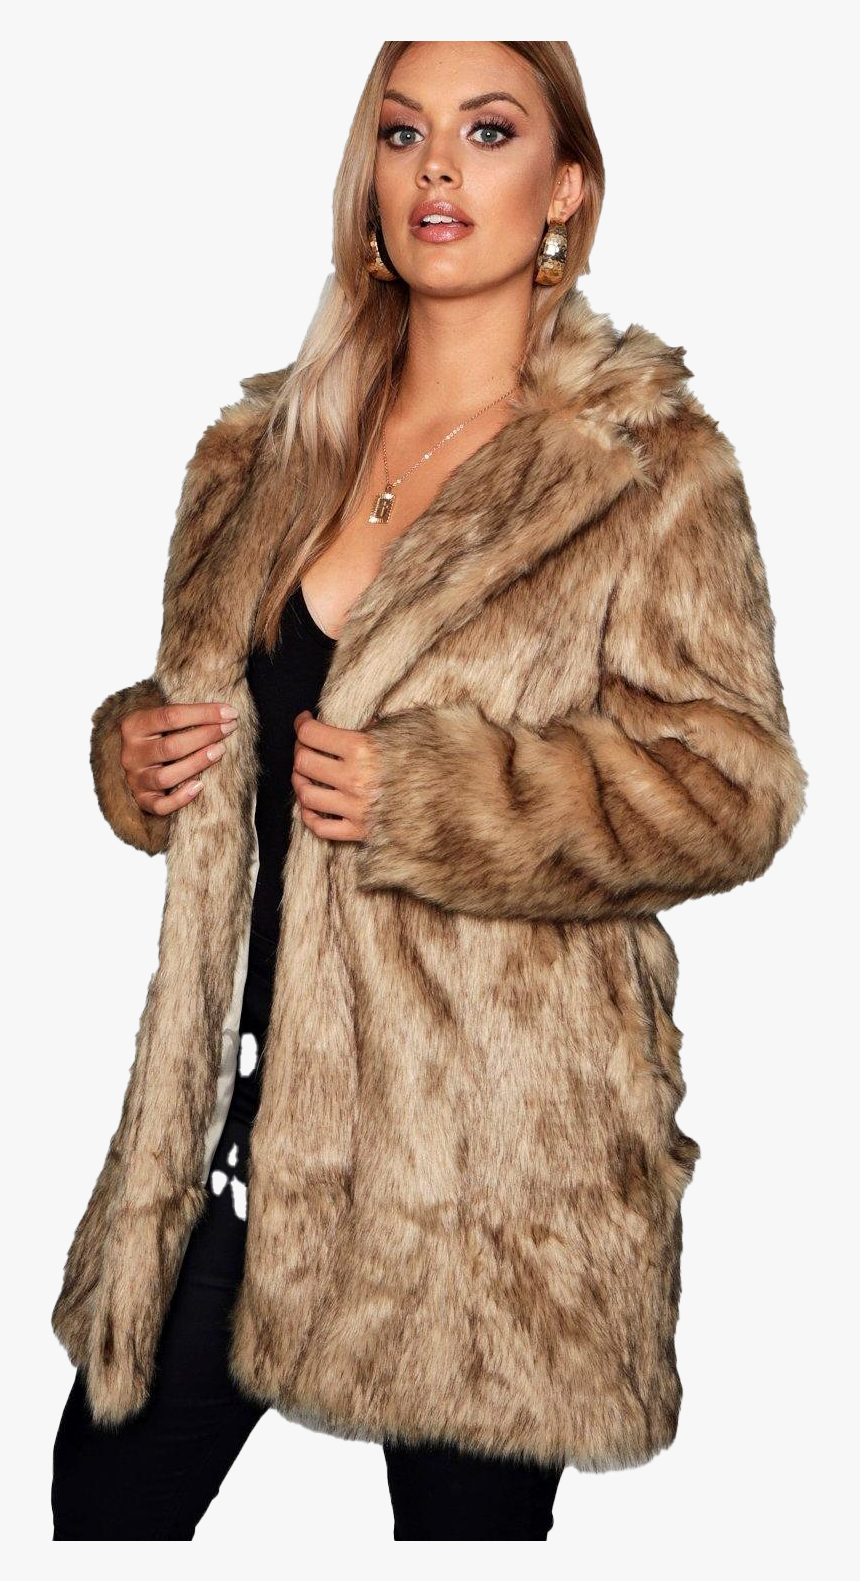 Fur Coat Png High Quality Image - Fur Clothing, Transparent Png, Free Download